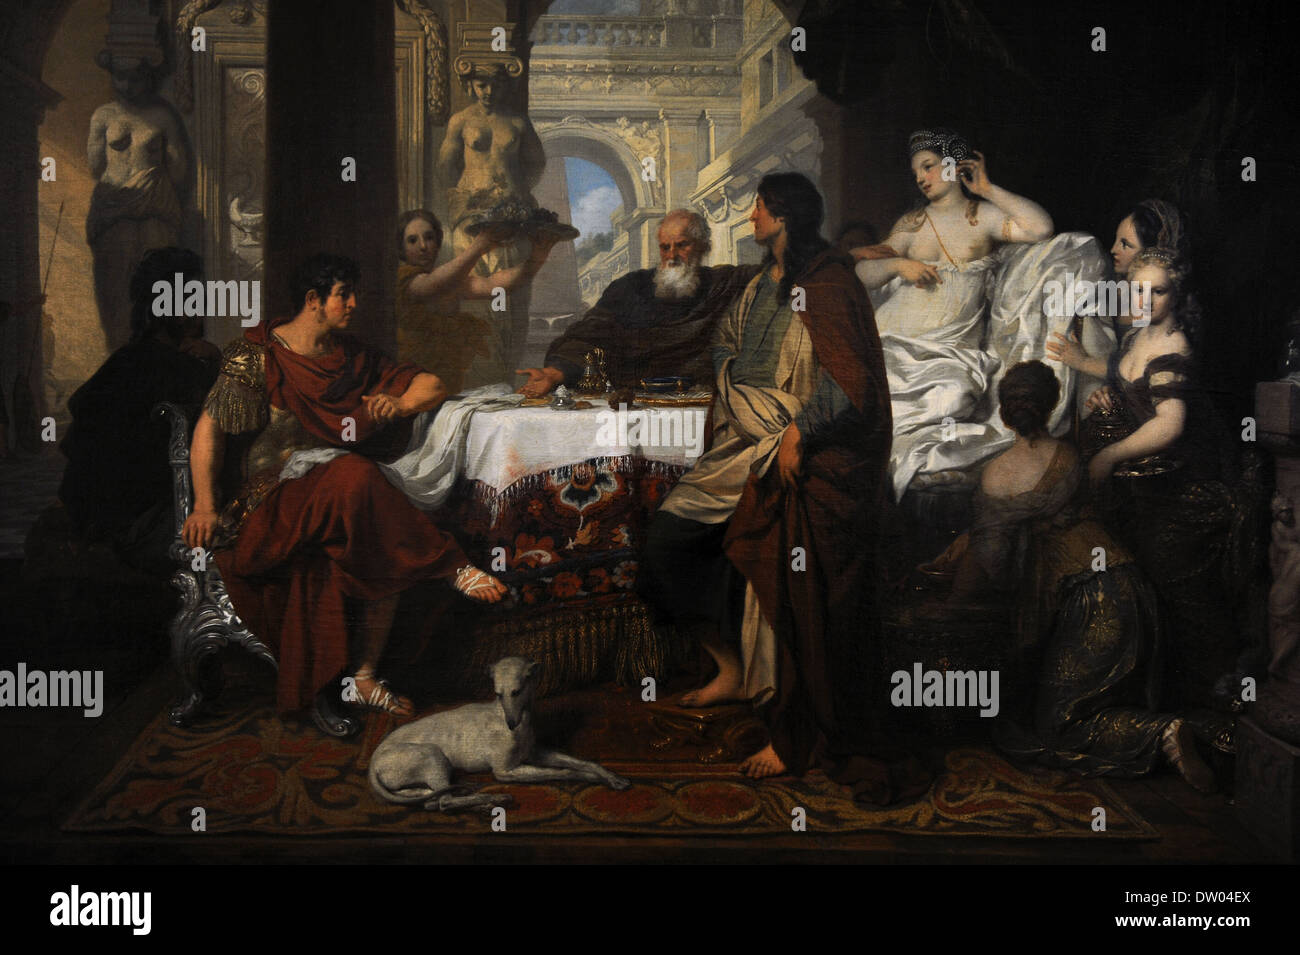 Gerard de Lairesse (1641-1711). Dutch painter. Cleopatra's Banquet, c. 1675-1680. Rijksmuseum. Amsterdam. Holland. Stock Photo